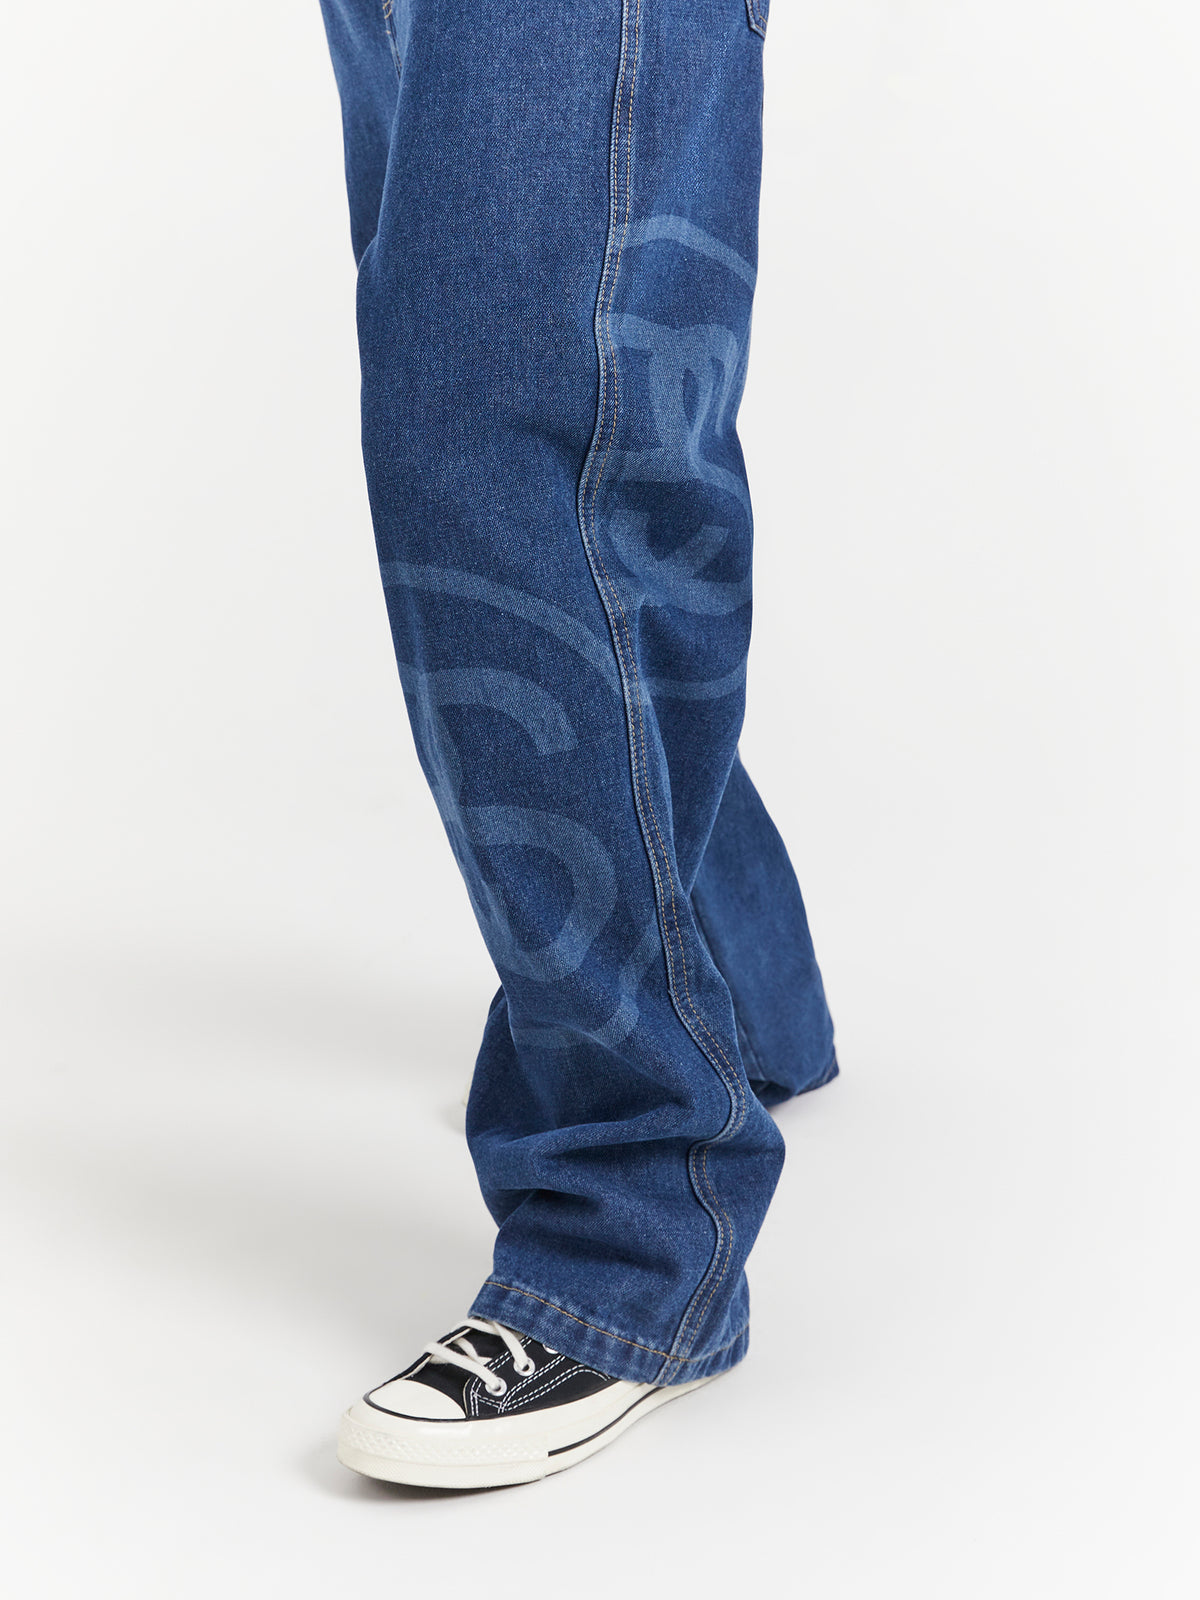 SS-Link Jeans in Dark Blue